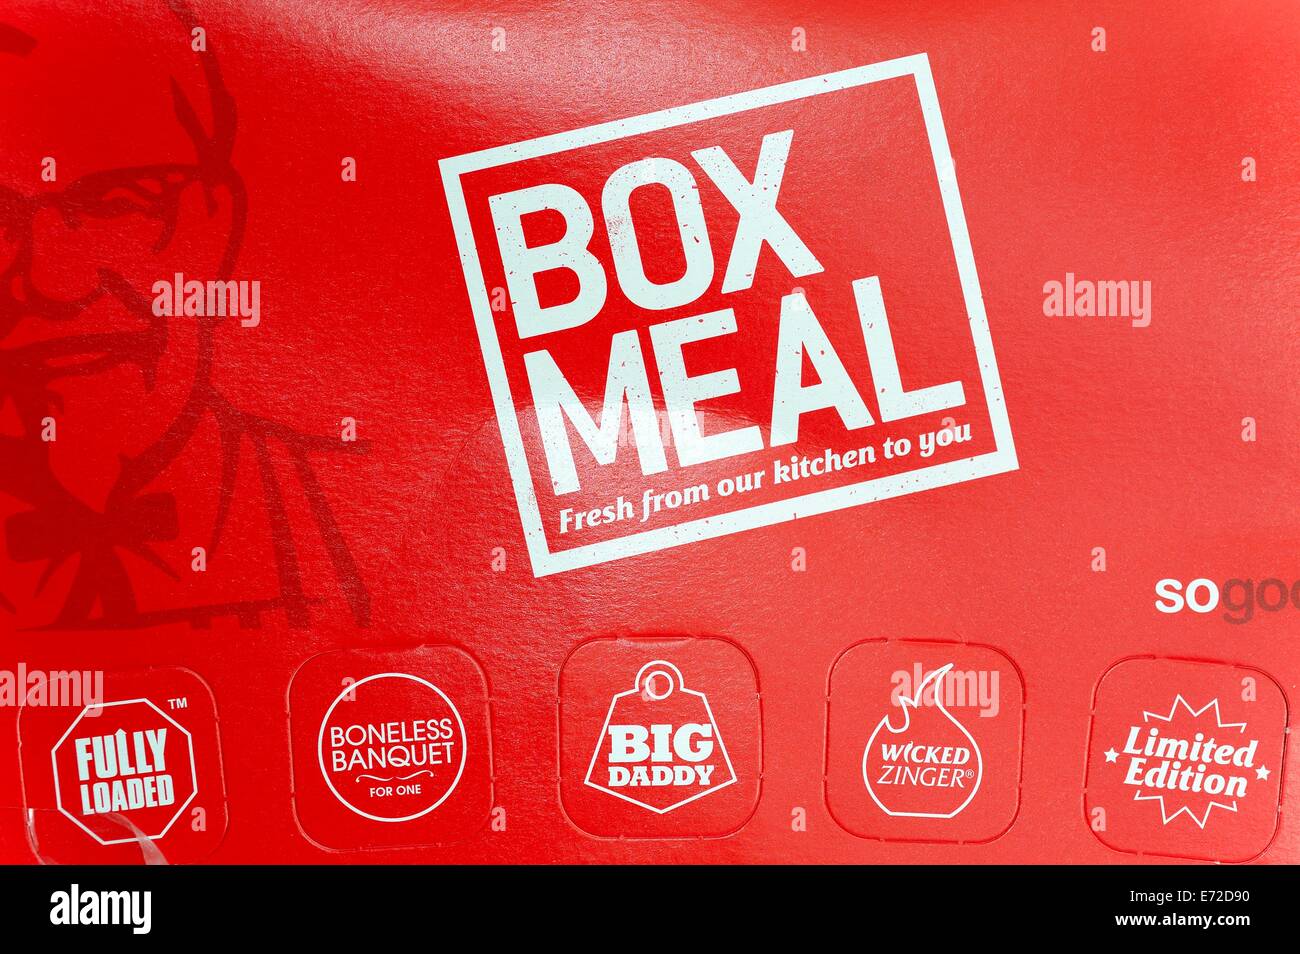 KFC box meal Stock Photo